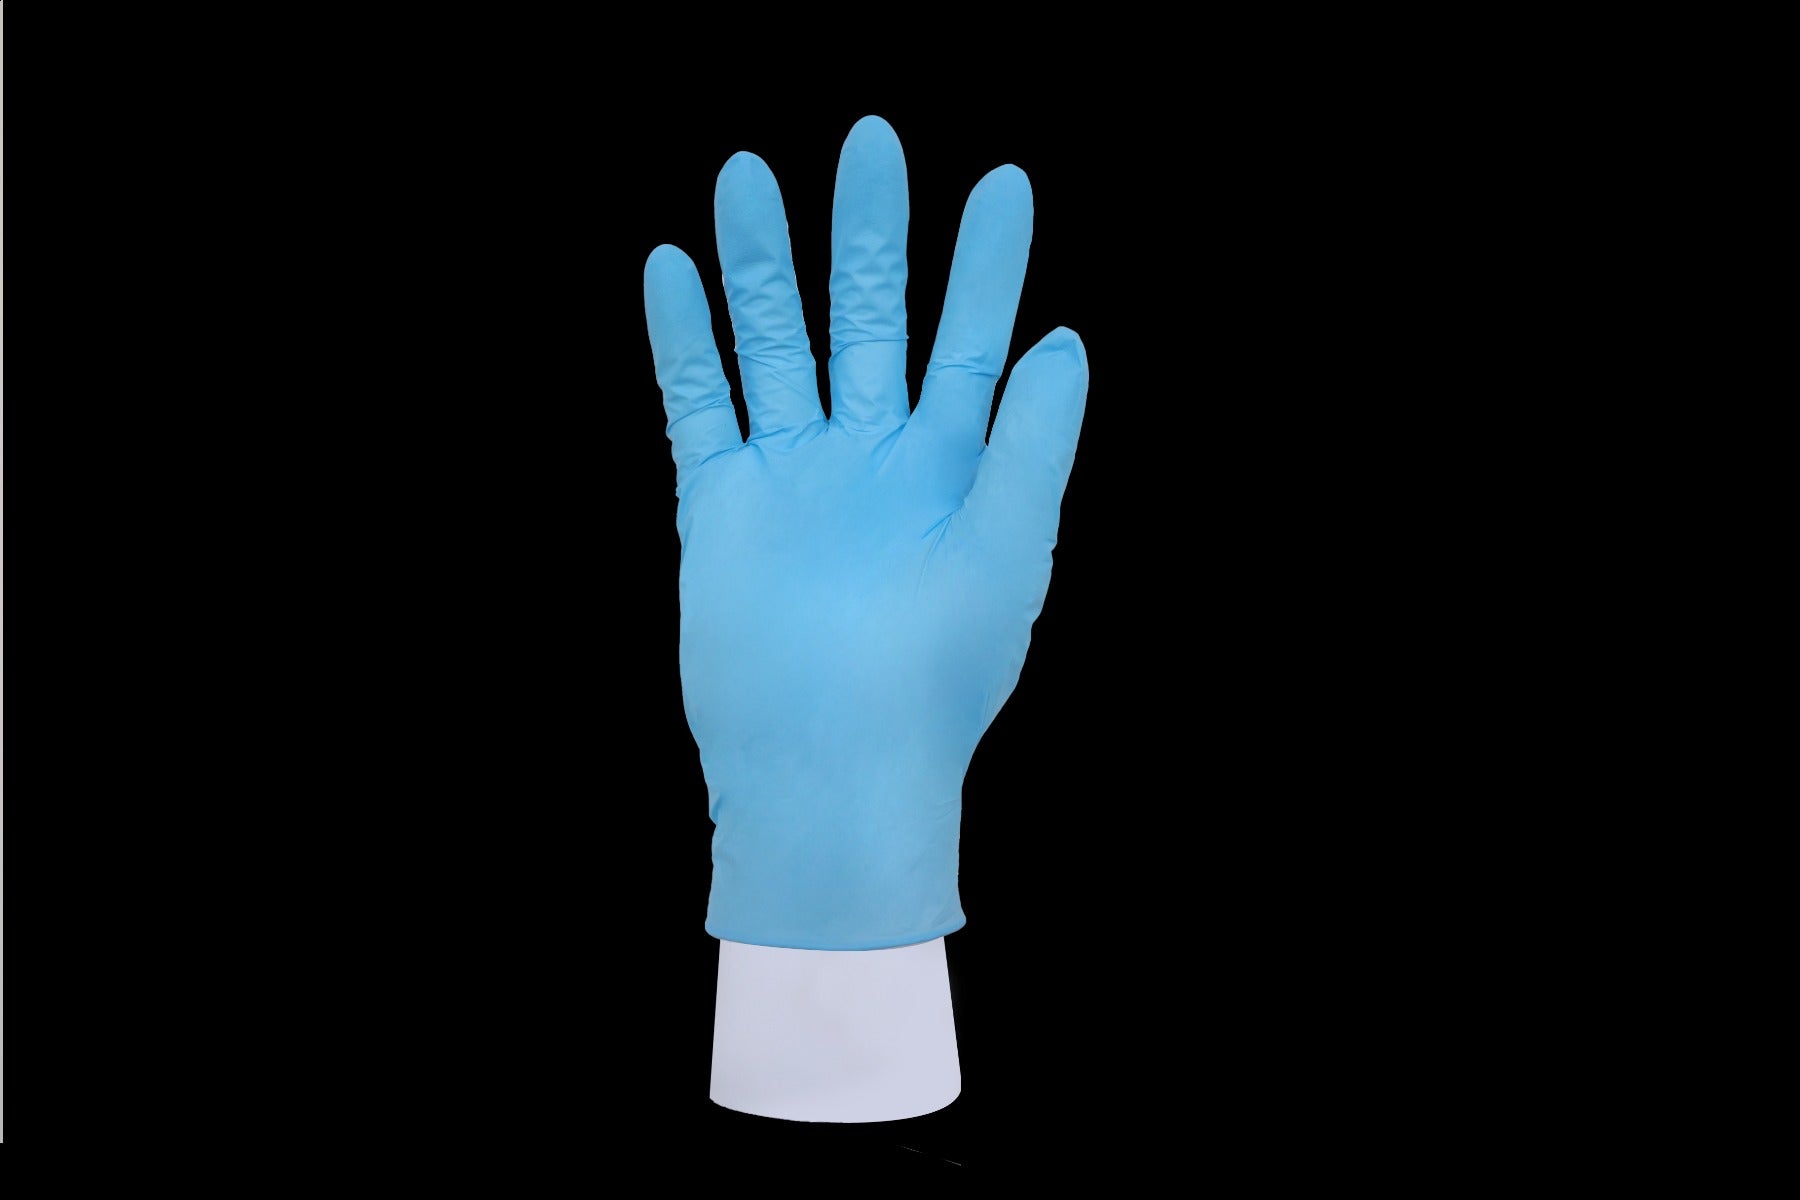 Essentials Ultra Nitrile Premium Gloves